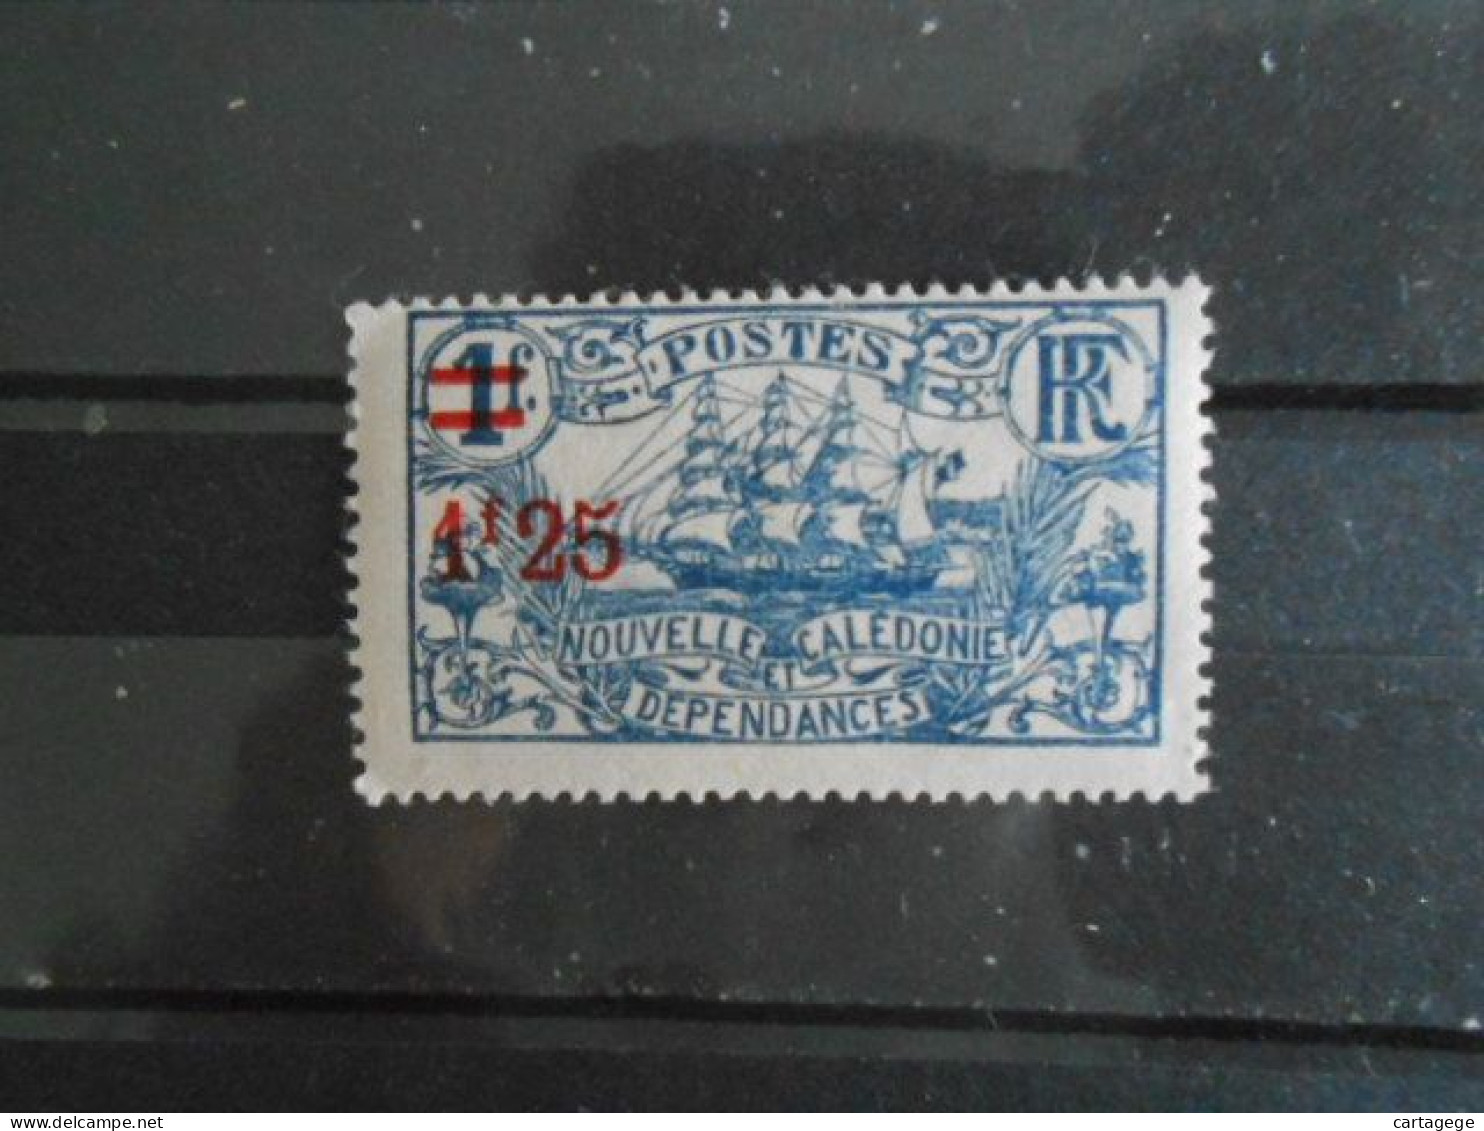 NOUVELLE-CALEDONIE YT 134 VOILIER  1f25 S.1f. Bleu* - Unused Stamps